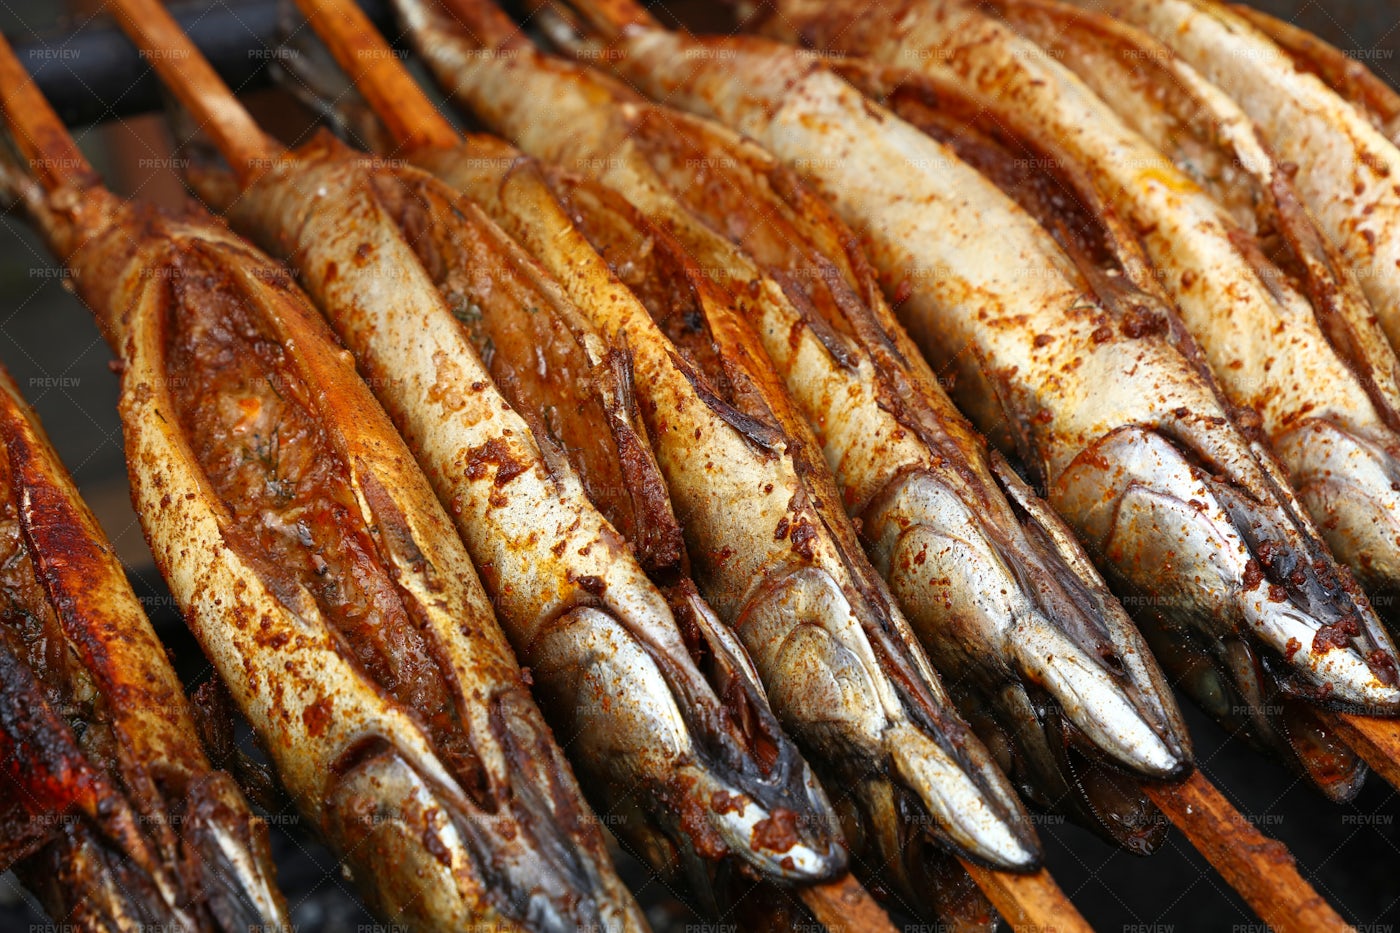 Mackerel Fish On The Grill: Stock Photos